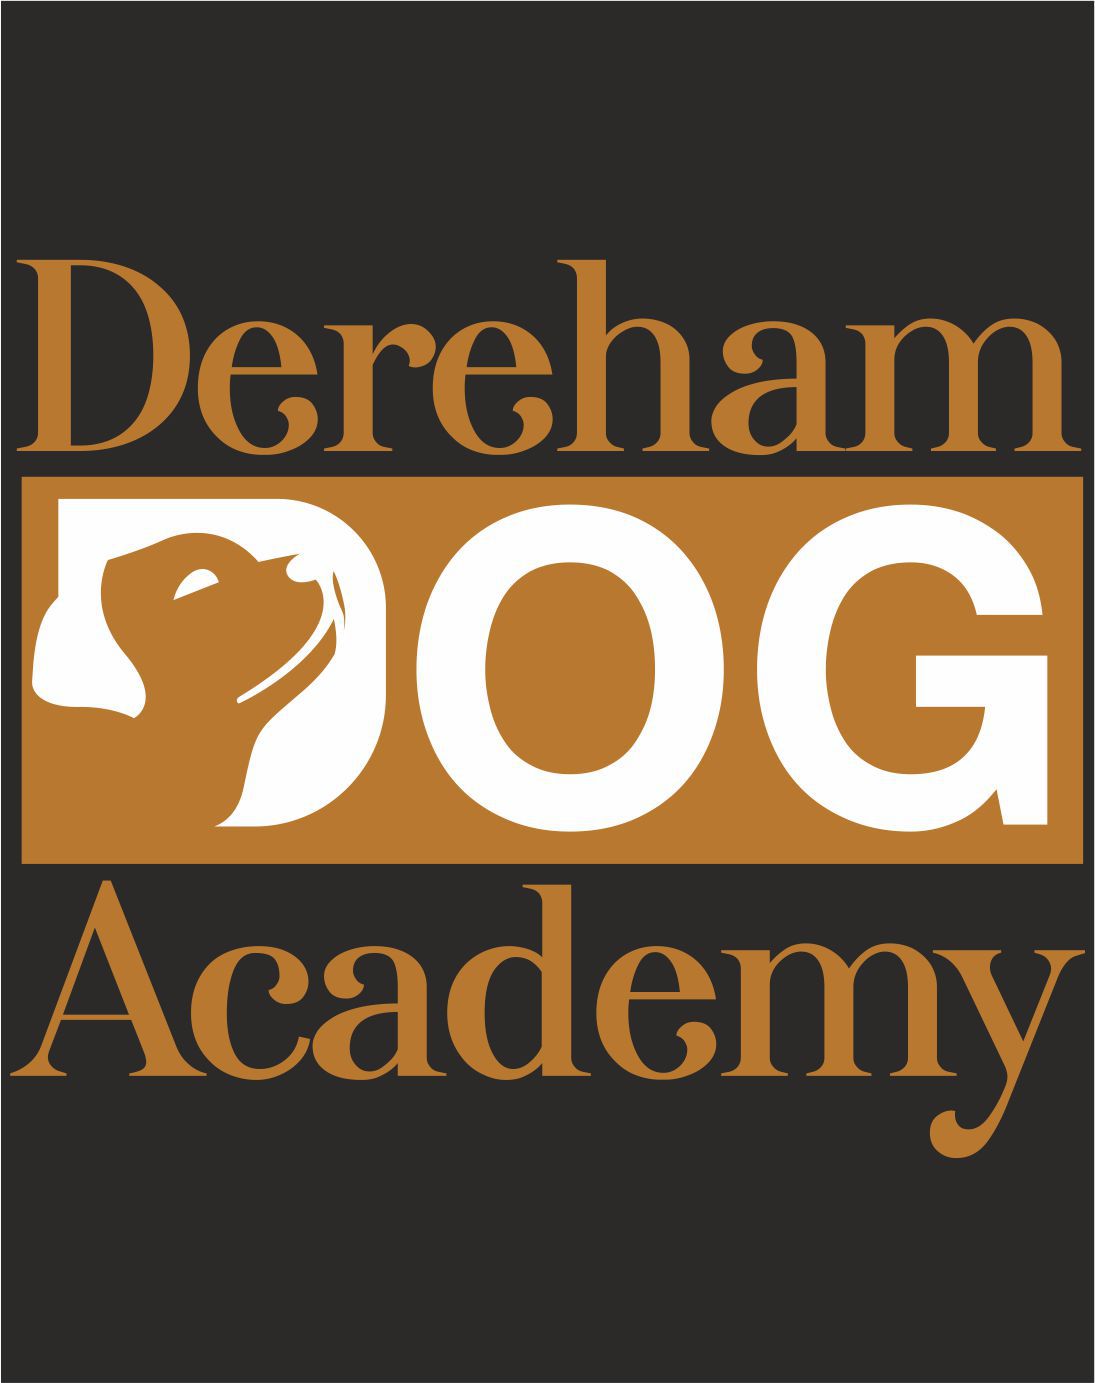 Dereham Dogs Academy Logo